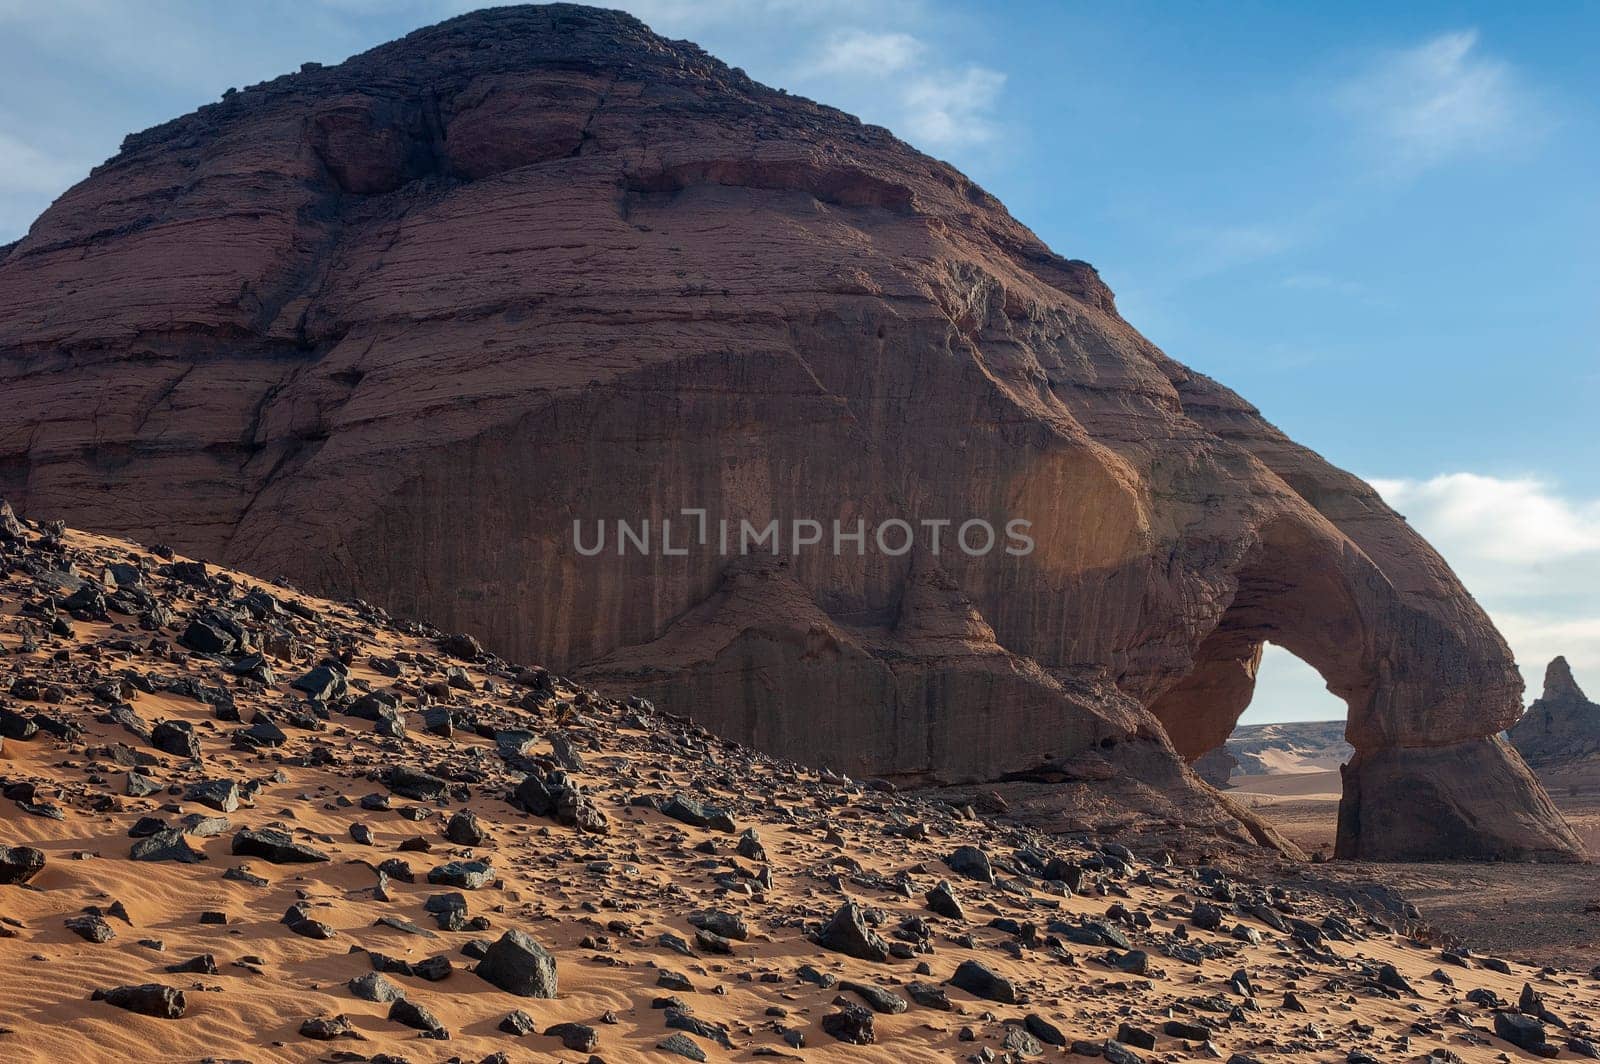 Libyan sahara desert by Giamplume